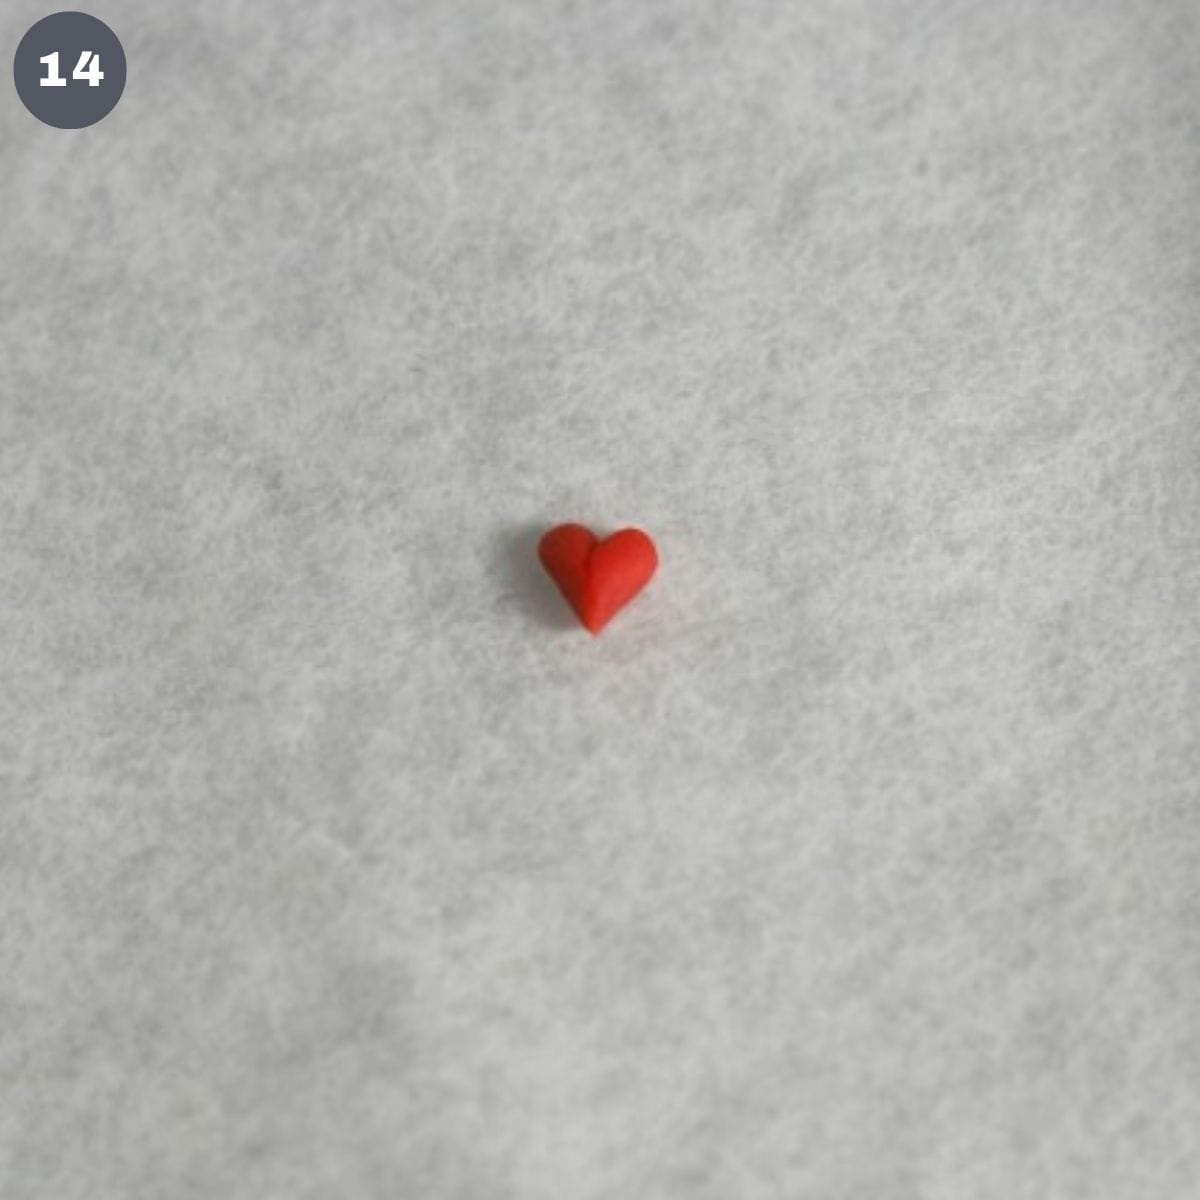 A tiny red fondant heart.